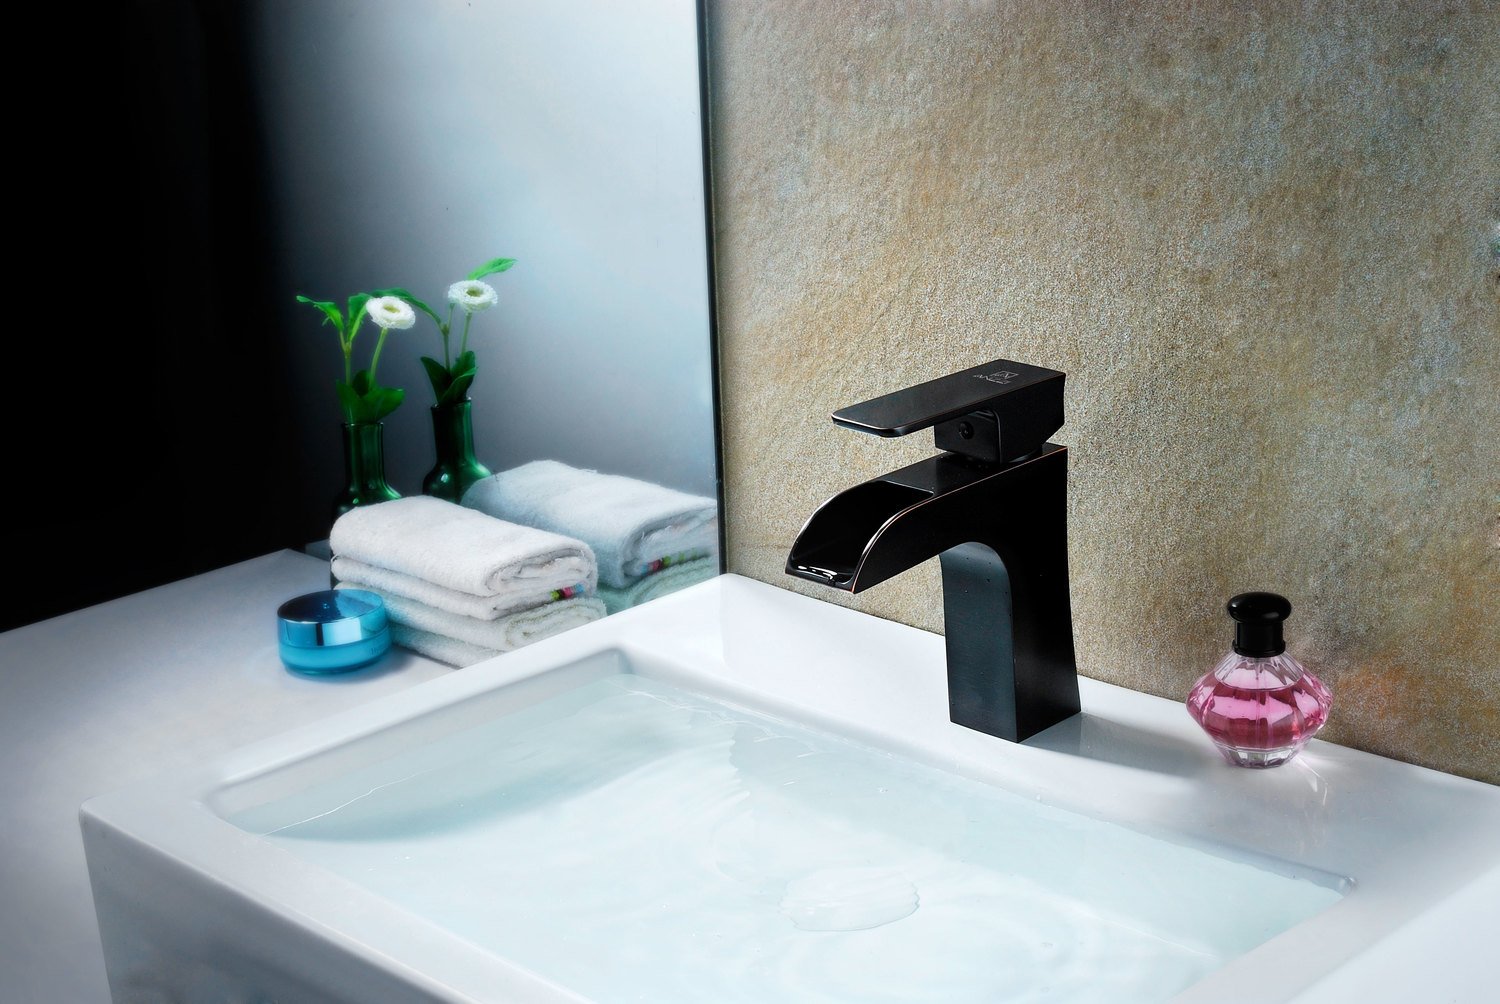 white vanity bathroom sink Anzzi BATHROOM - Faucets - Bathroom Sink Faucets - Single Hole Bronze